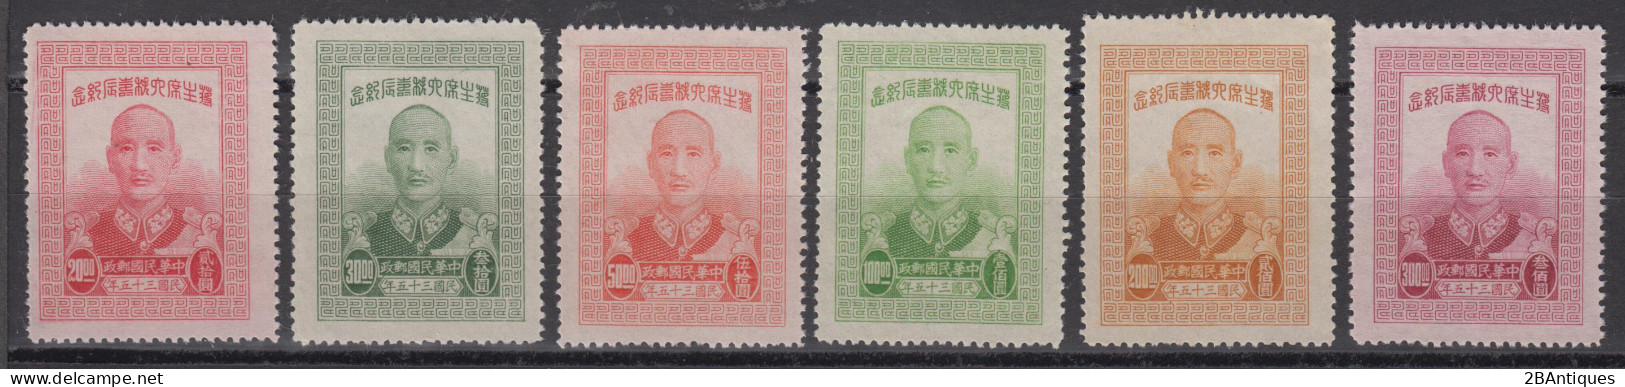 CHINA 1946 - The 60th Anniversary Of The Birth Of Chairman Chiang Kai-shek PERF 14 MNH** XF - 1912-1949 Republic